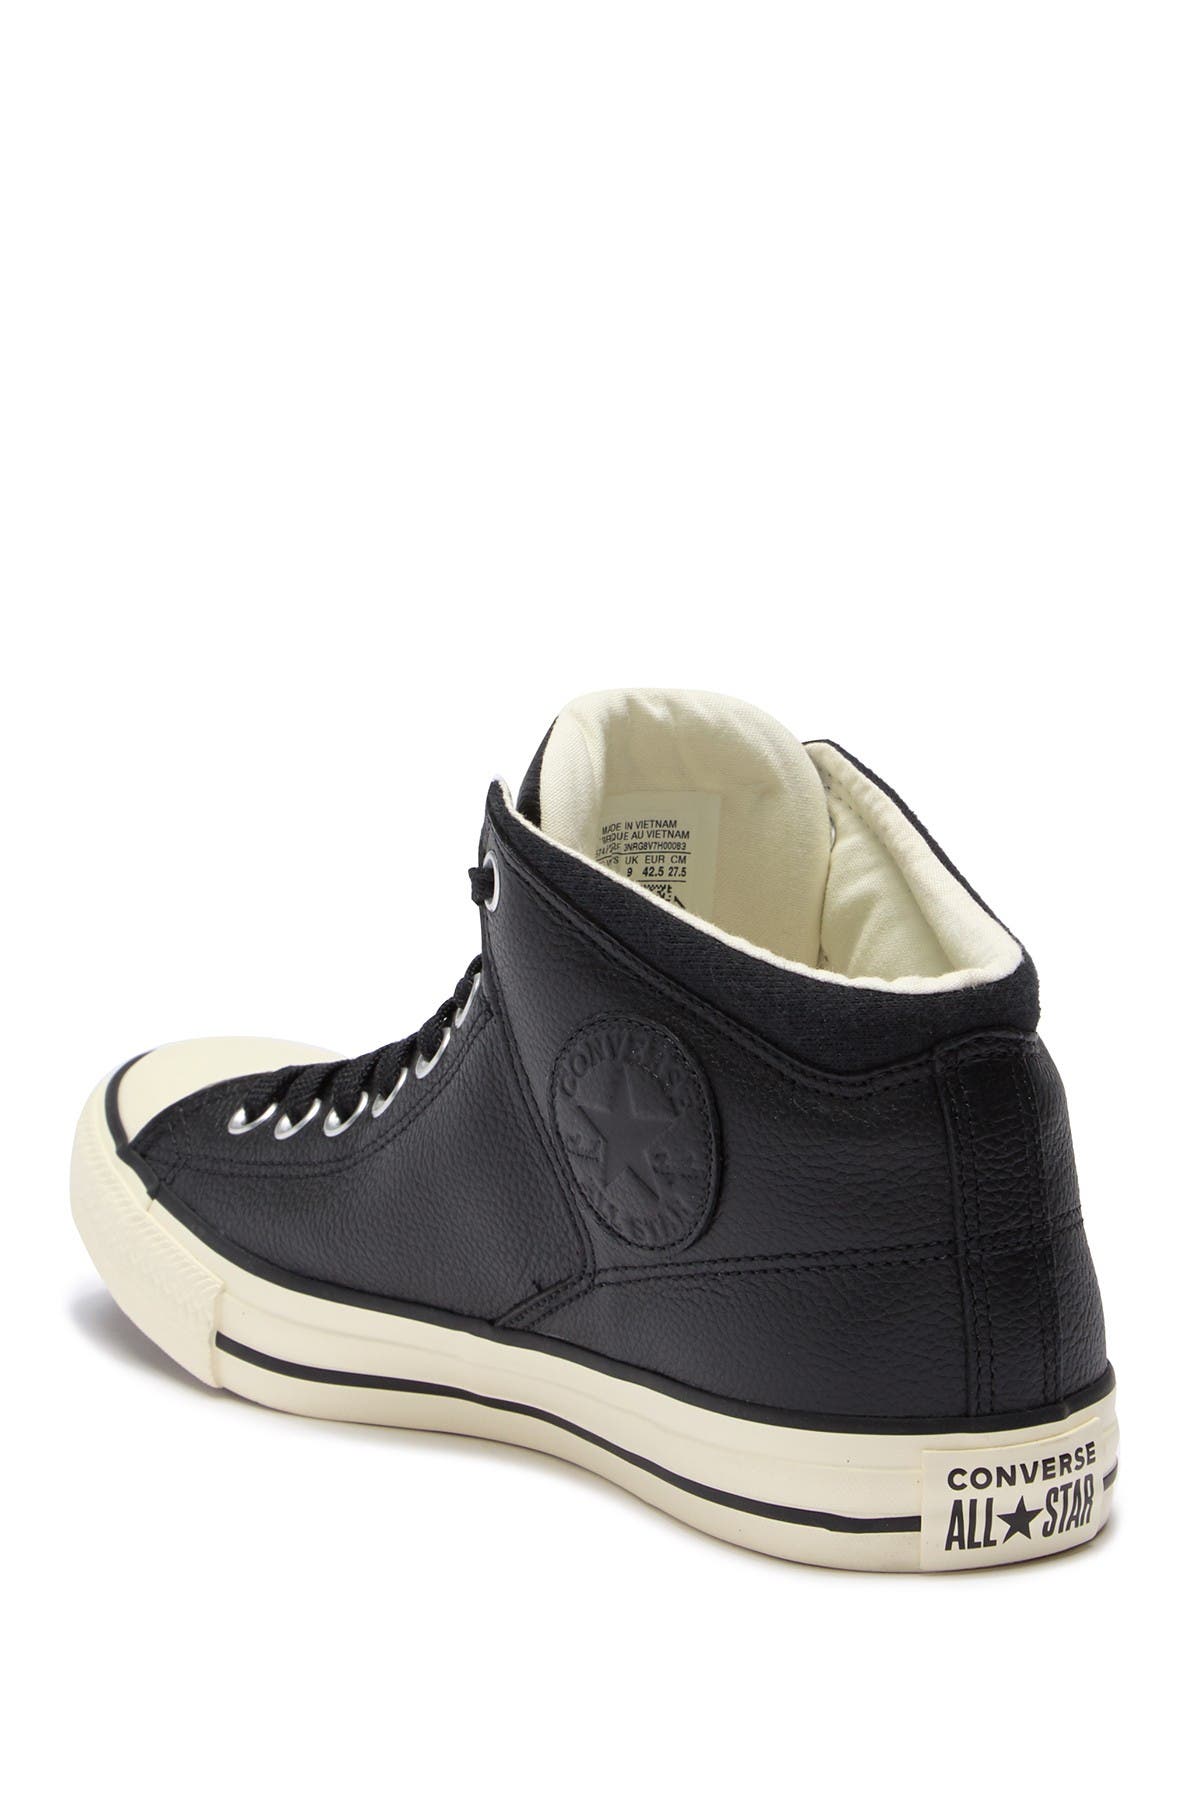 converse men's street leather high top sneaker